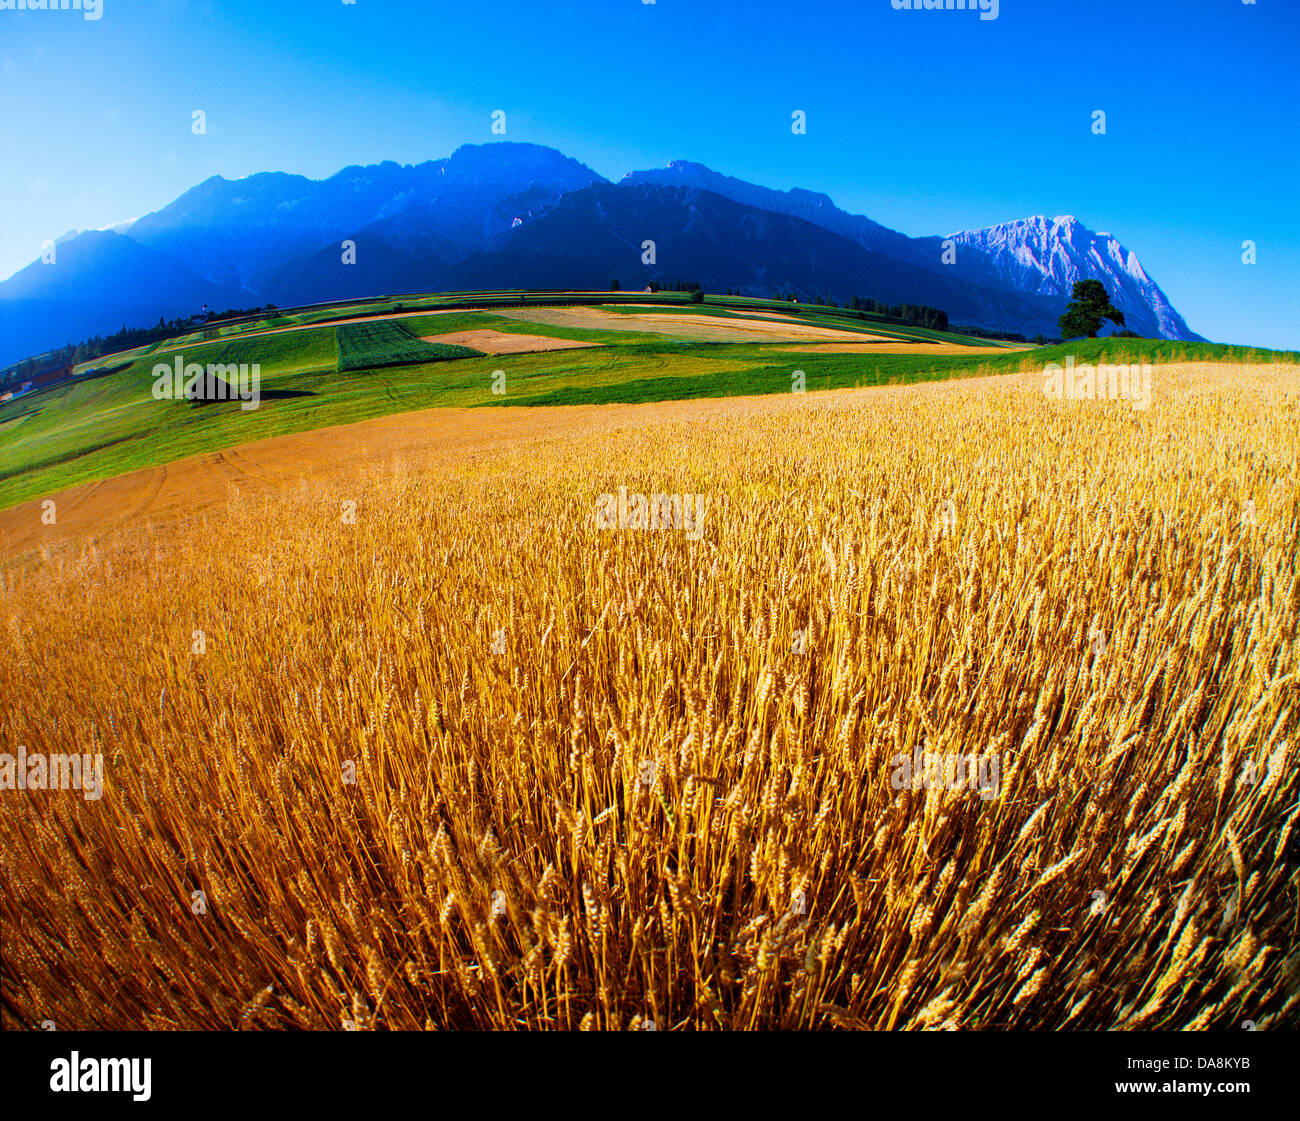 Austria, Europe, Tyrol, Mieminger plateau, Mieming, wheat field, wheat, summer, meadow, fields, mountains, Mieminger chain, Sain Stock Photo